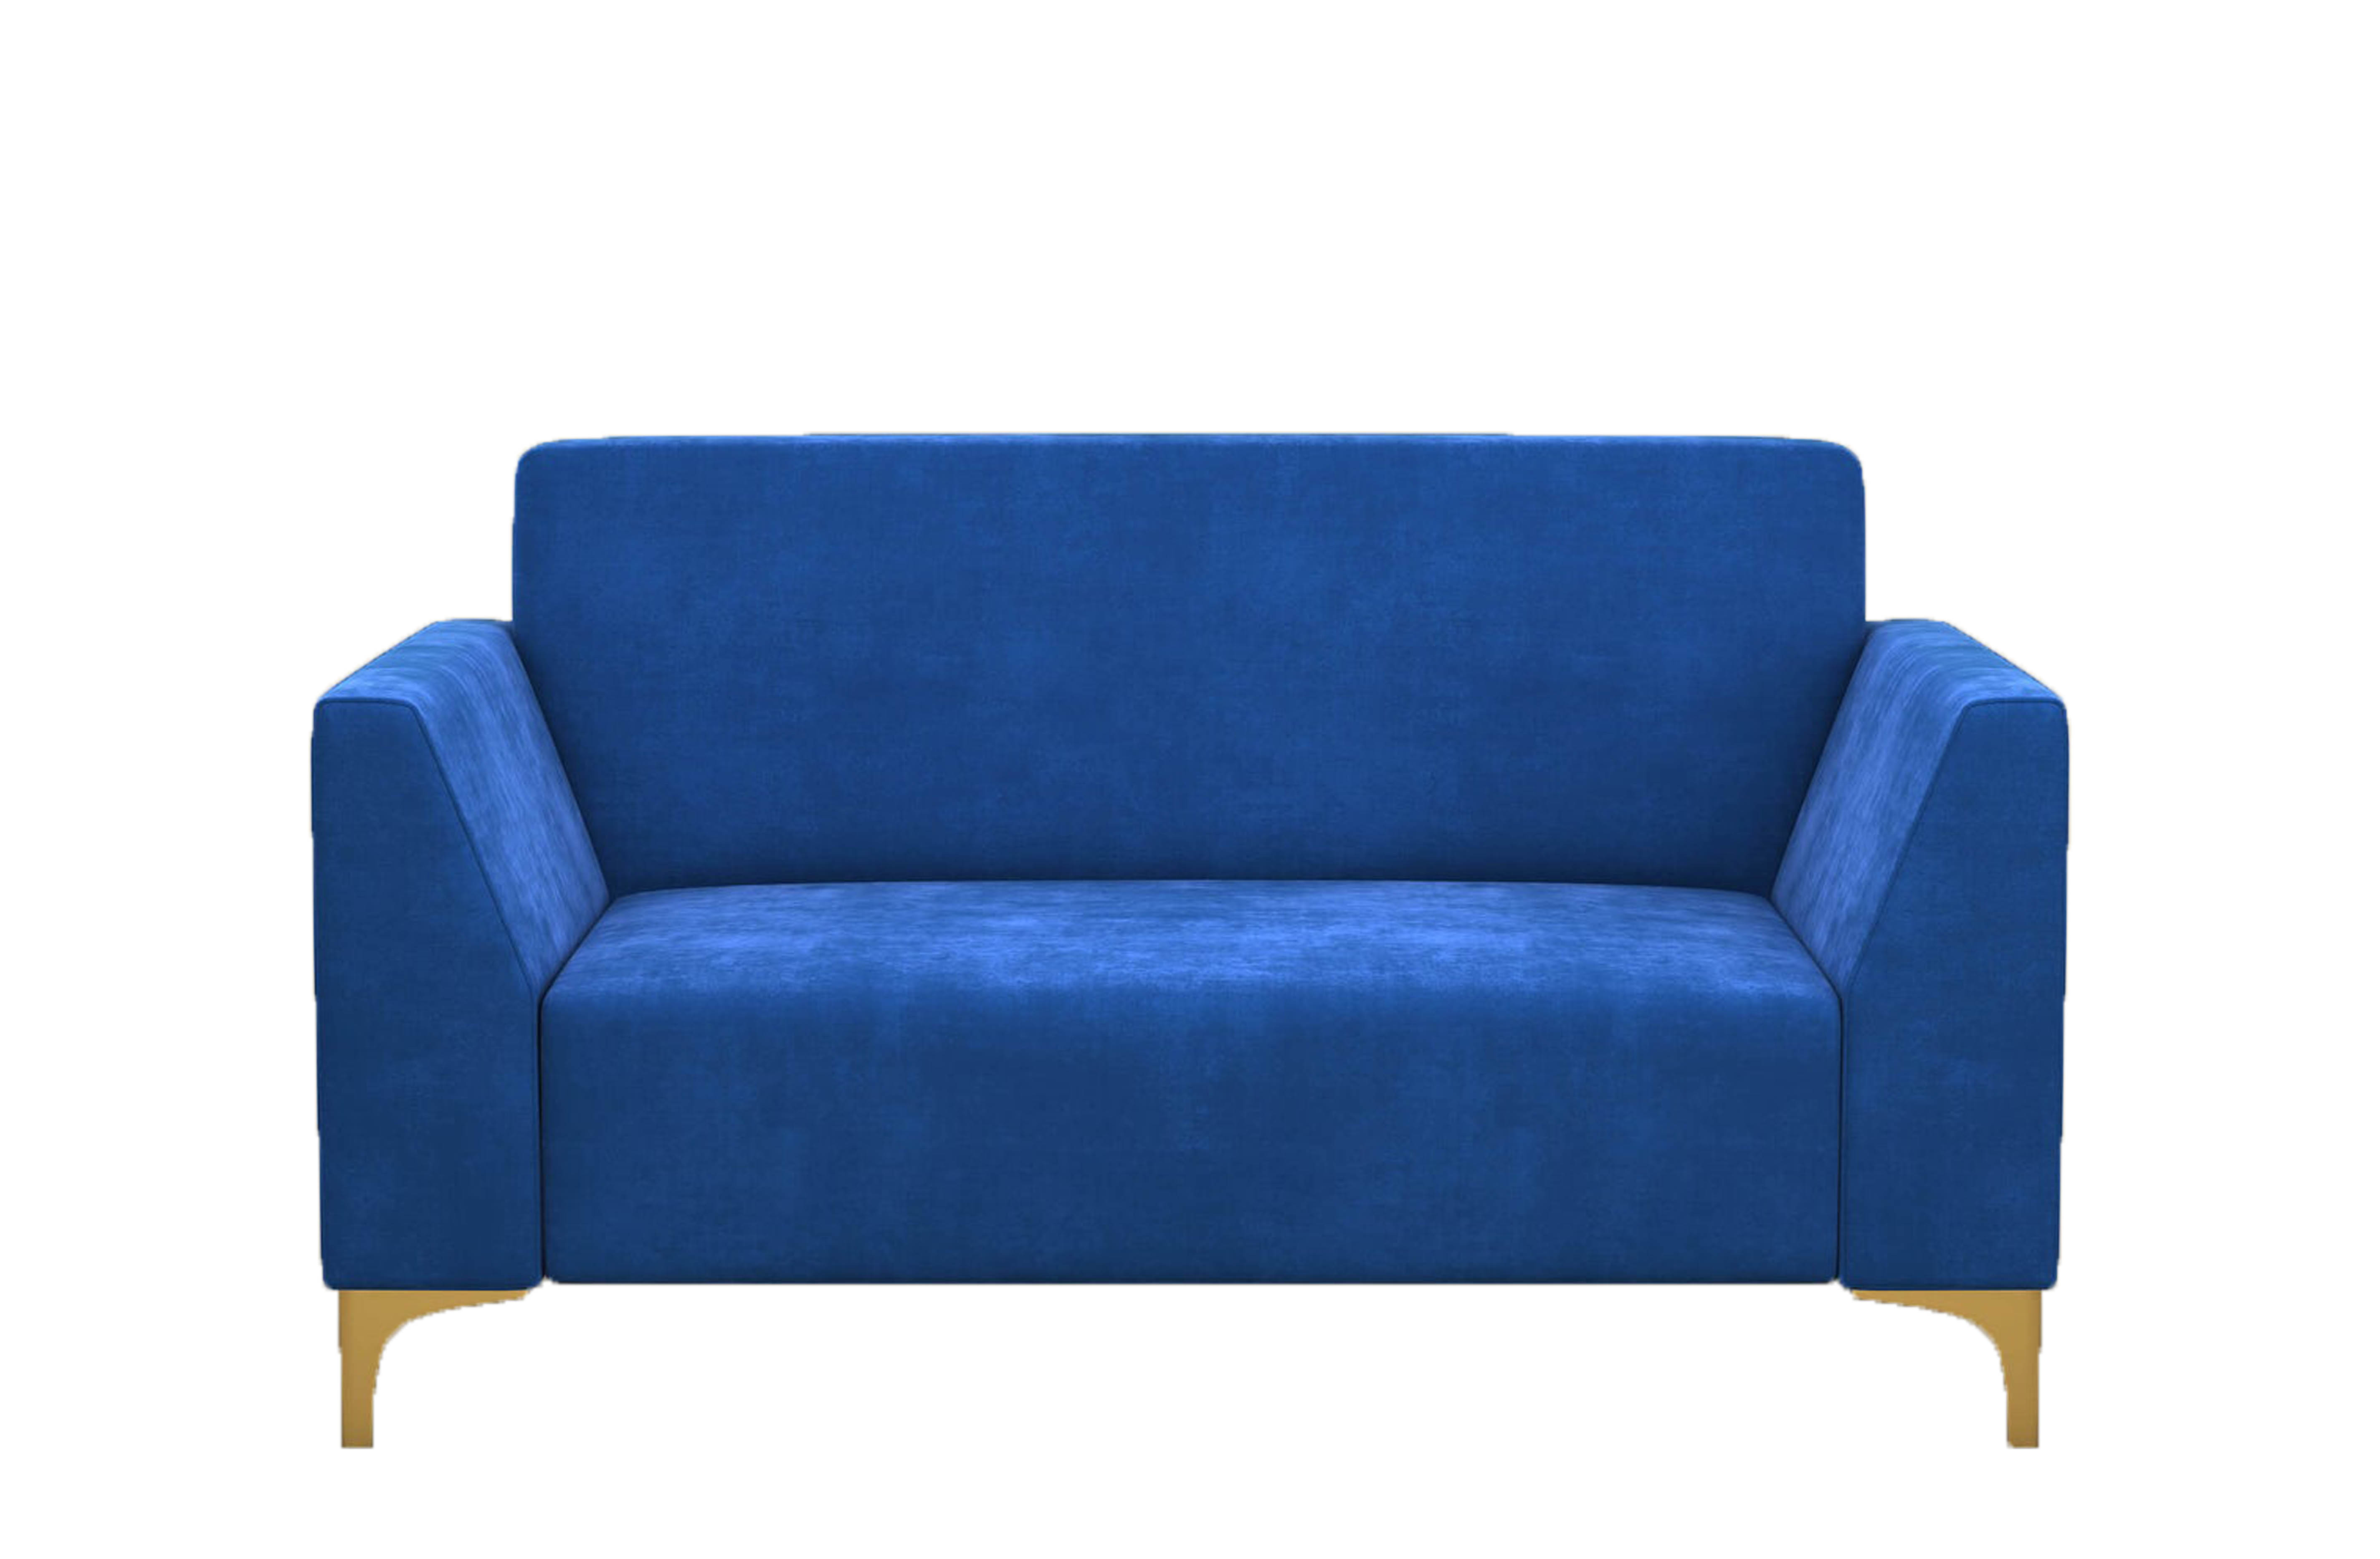 Kia 2 seater blue sofa